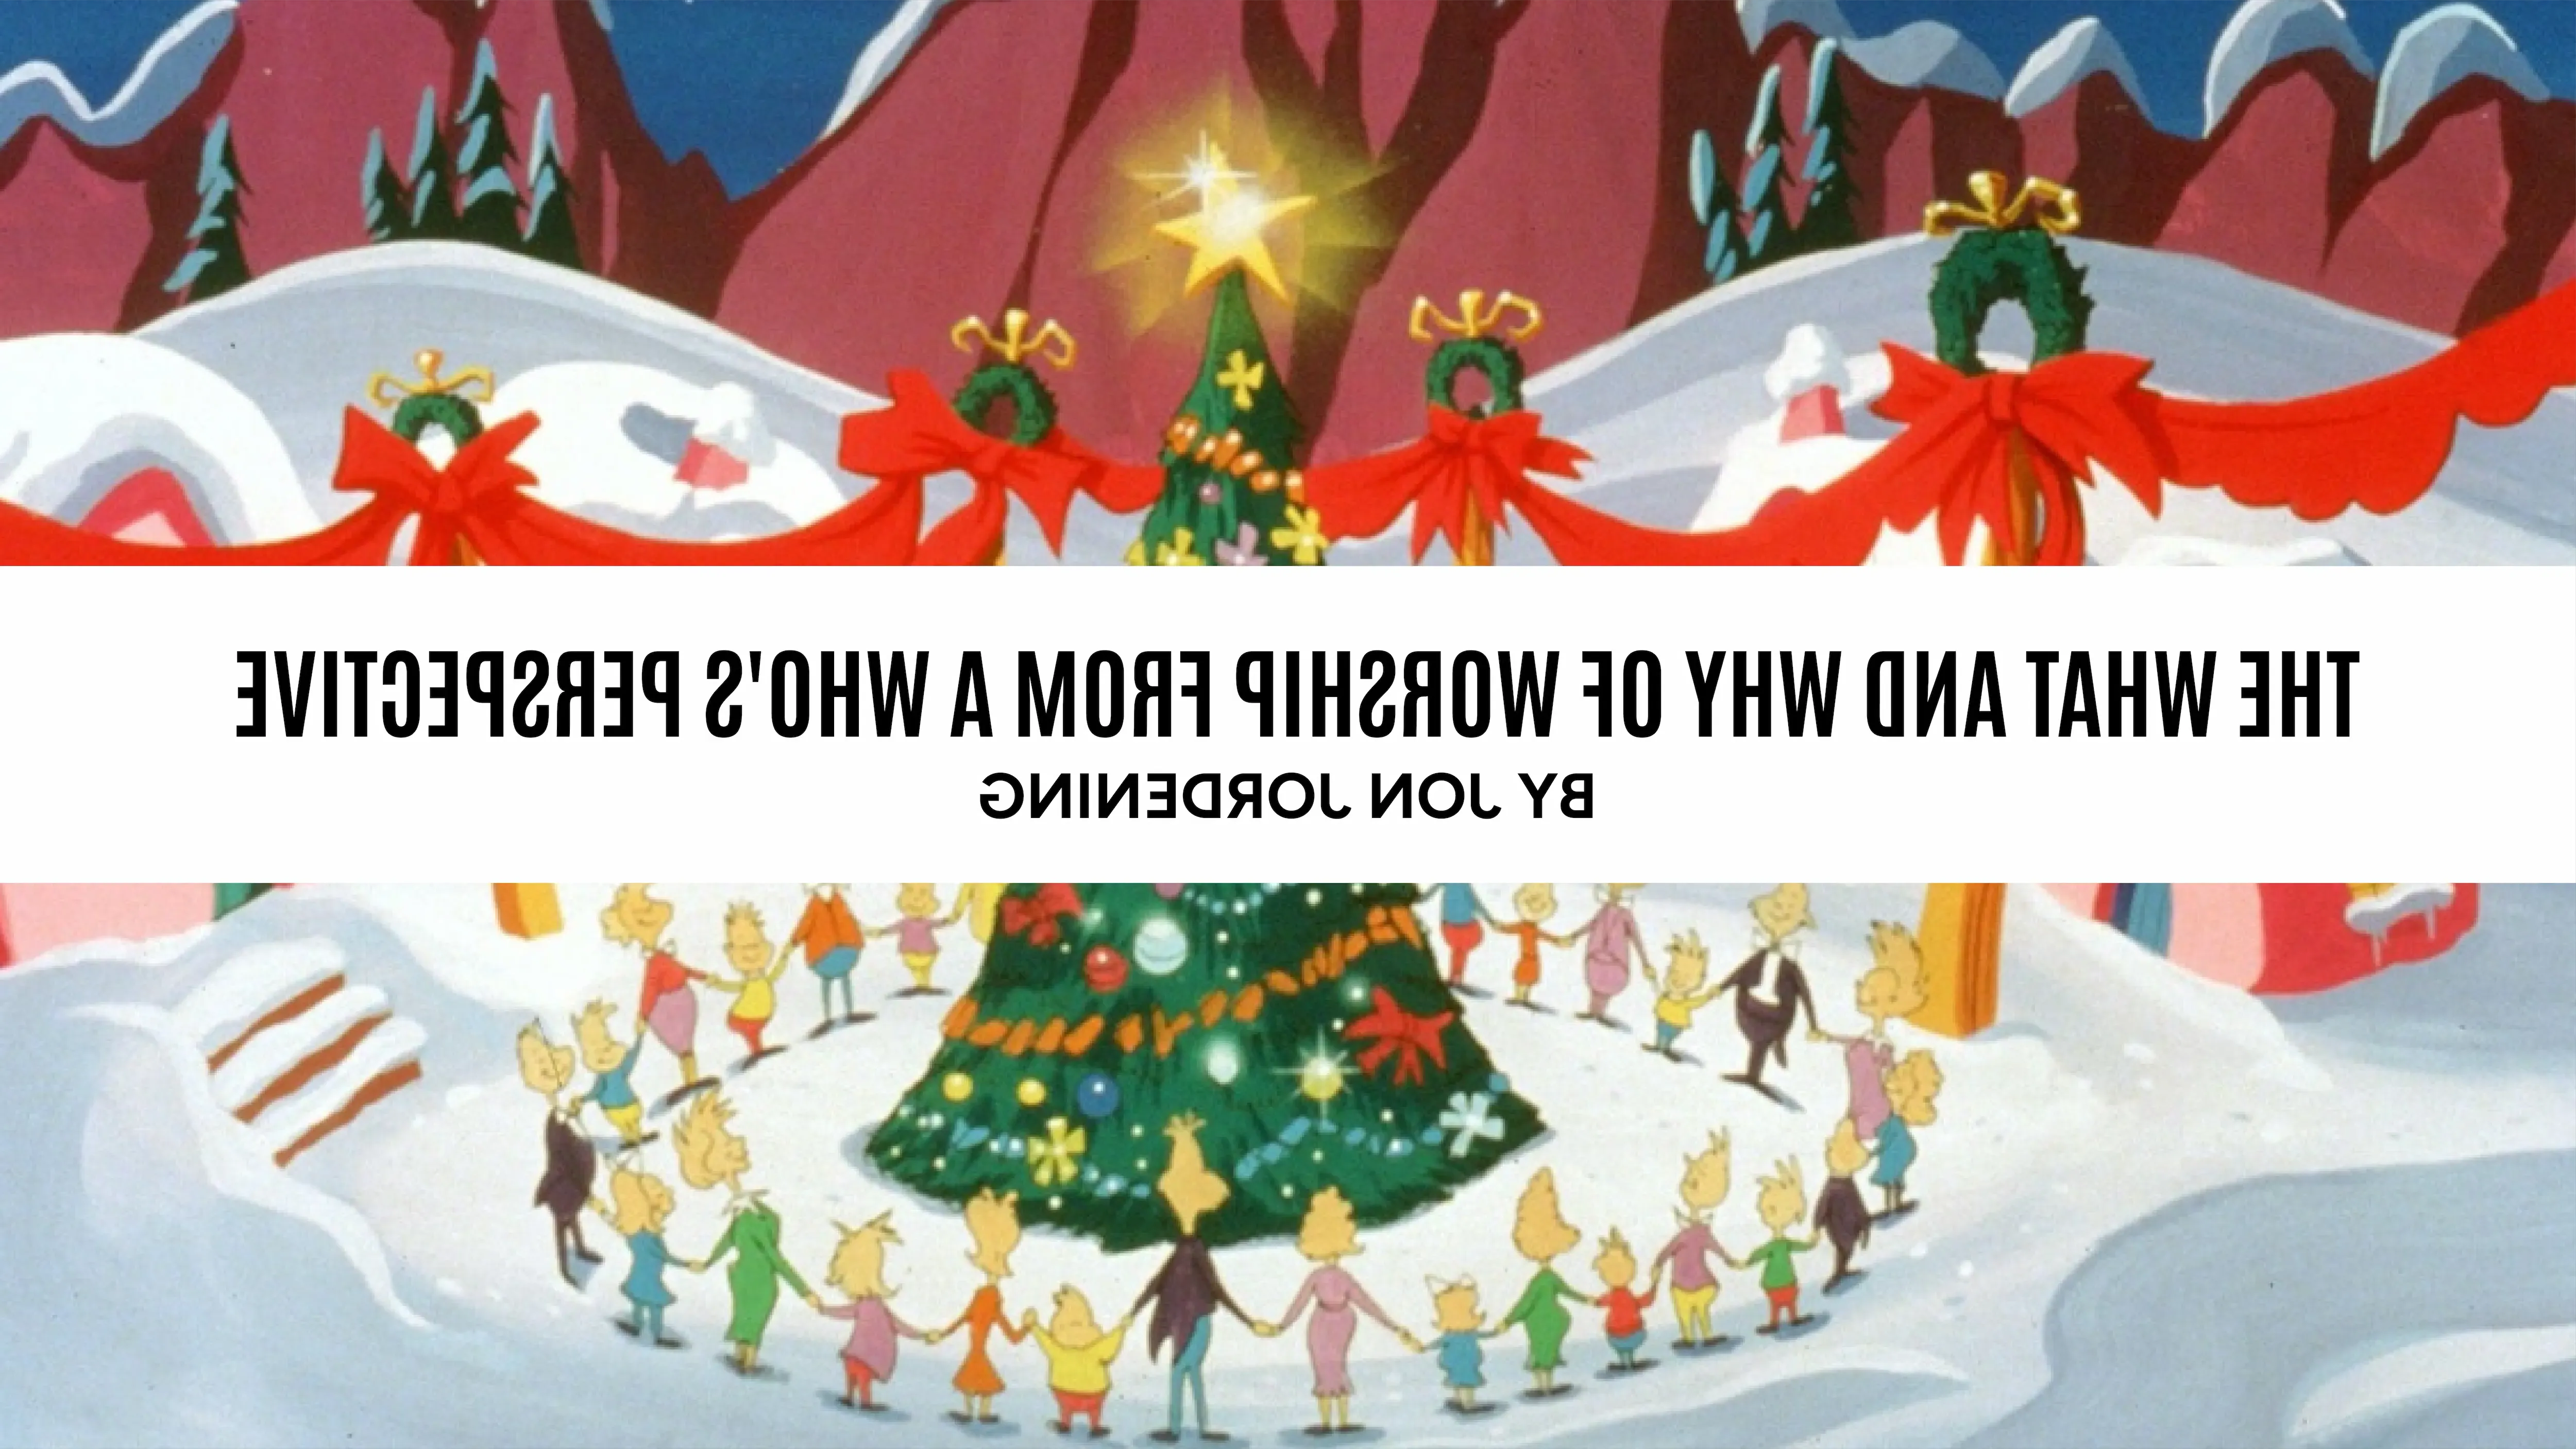 Illustration of Who's 唱歌 around the Christmas tree